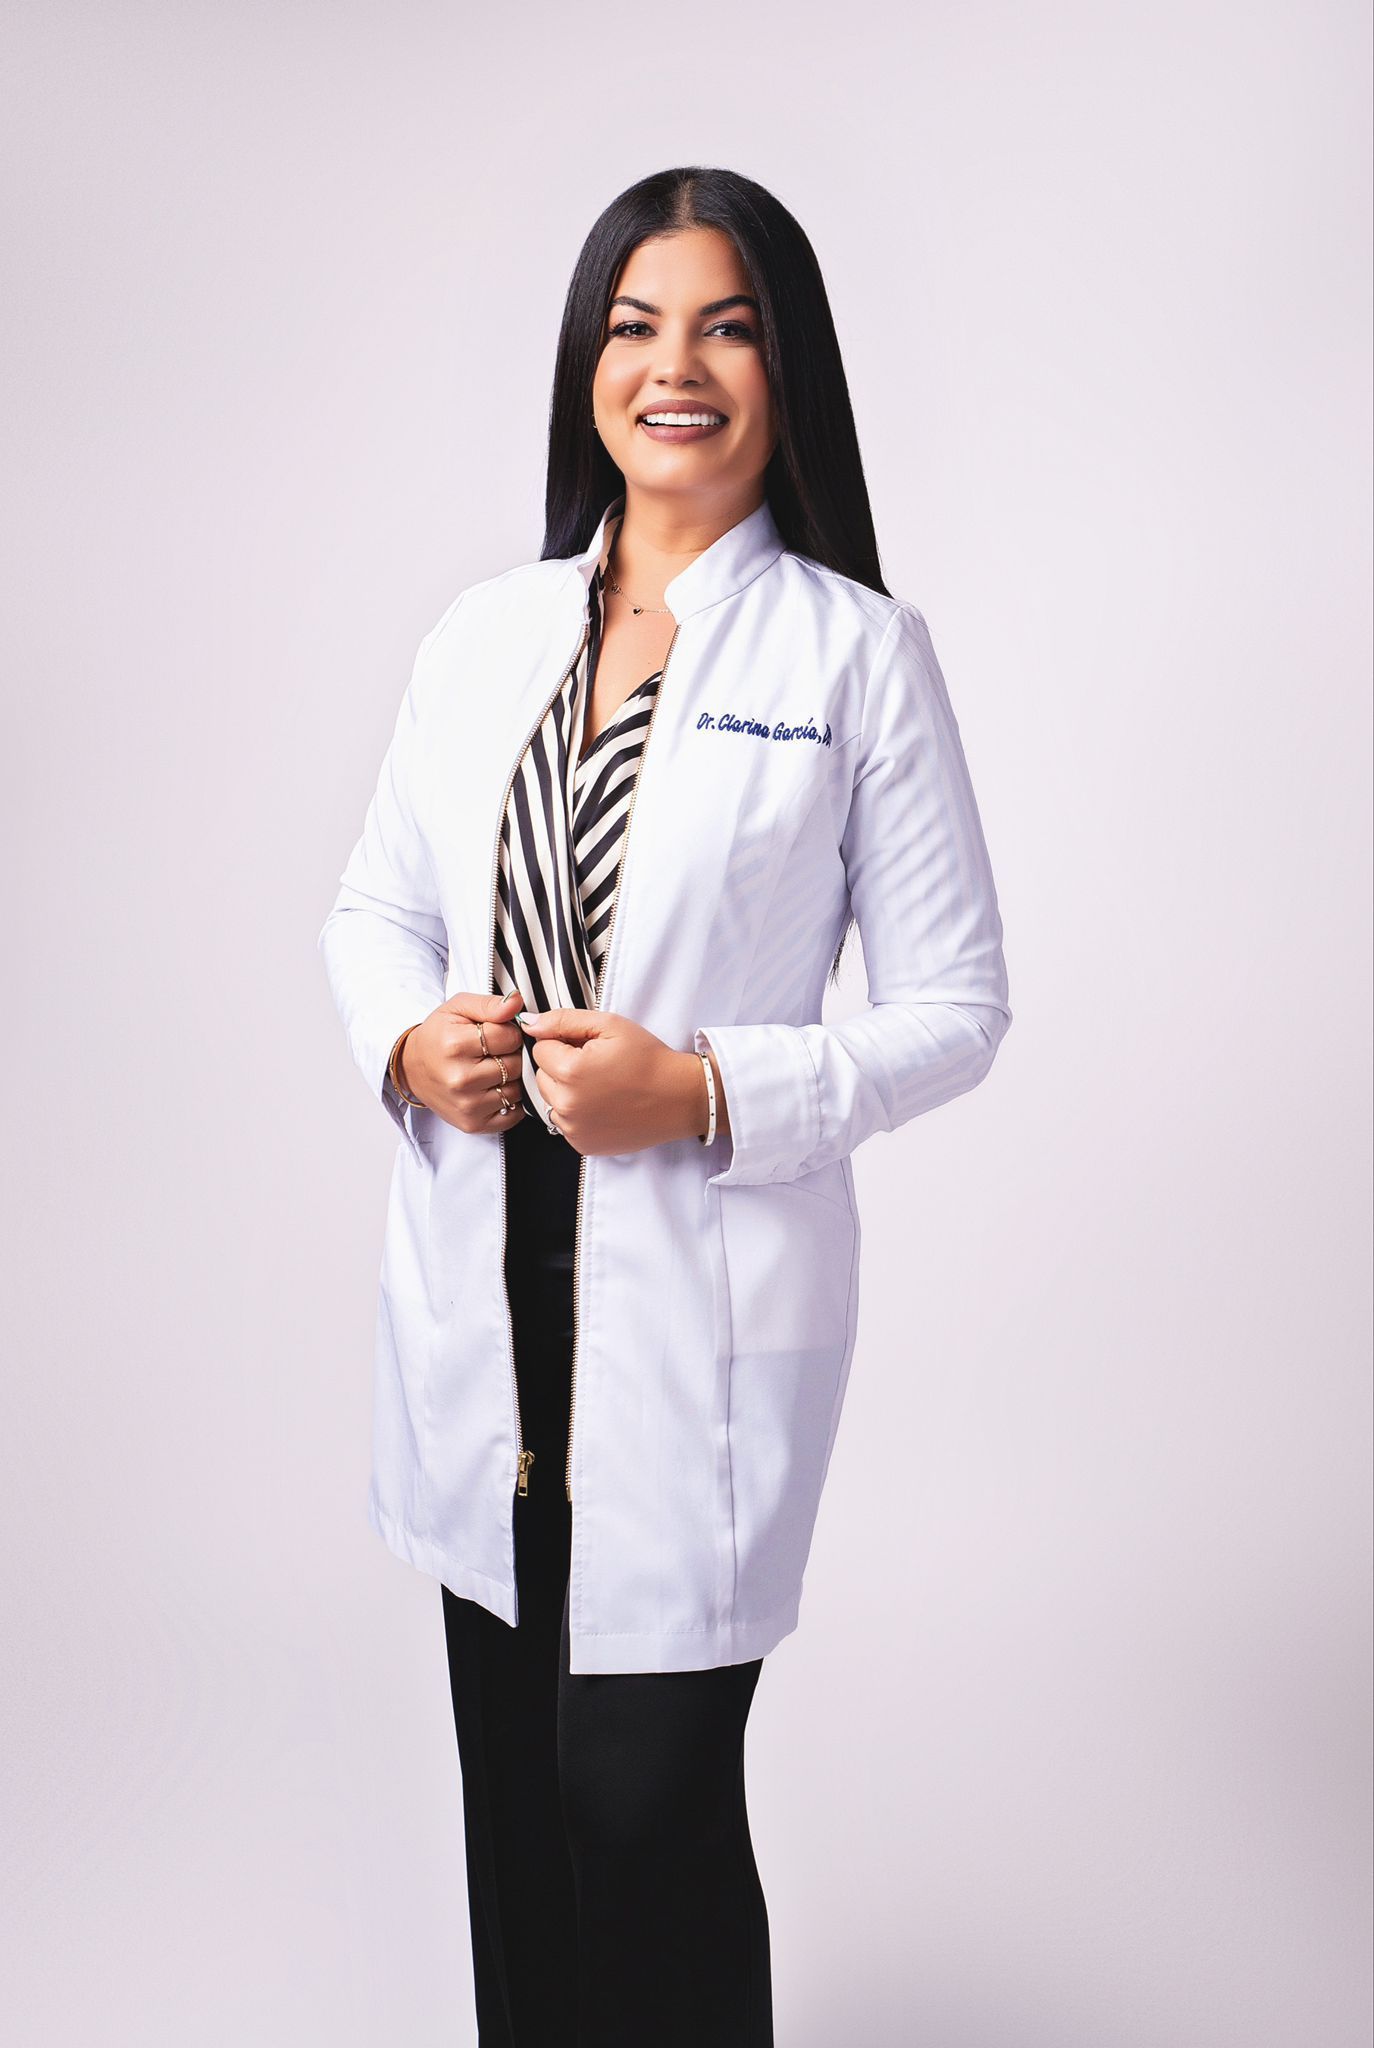 Dr Clarina Garcia